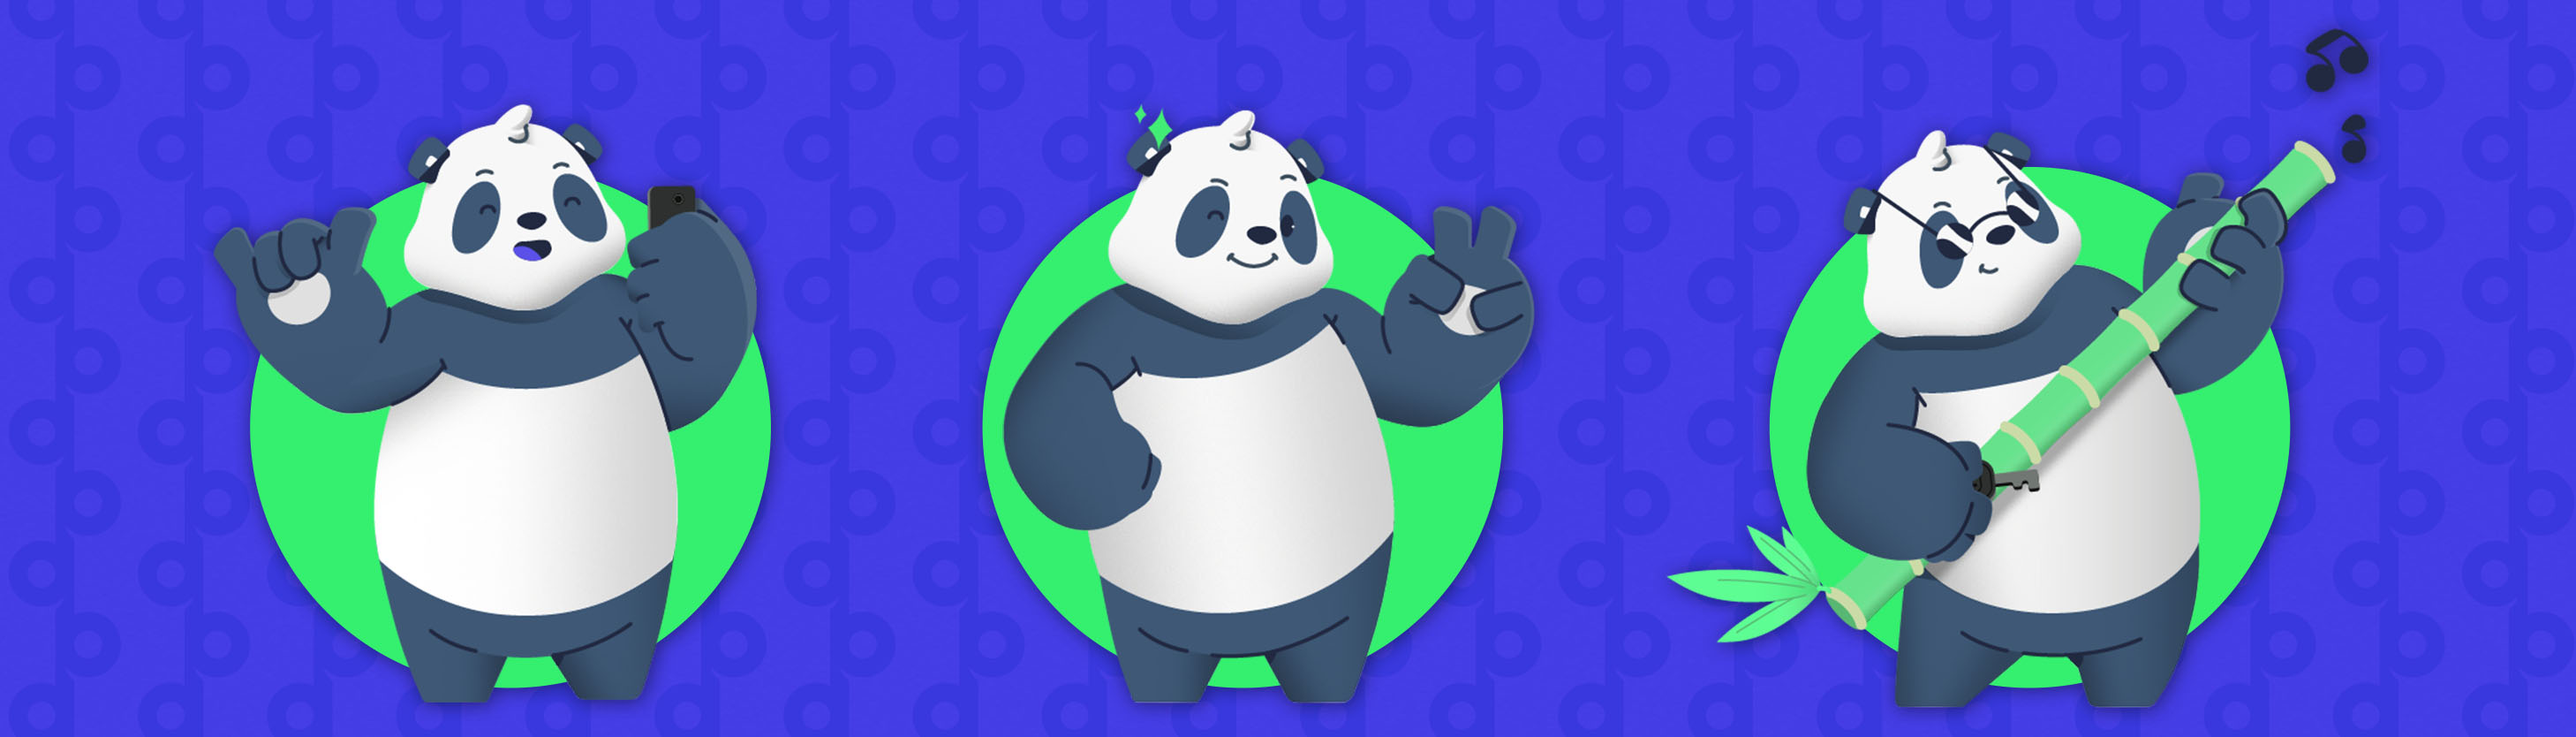 BMB_7_Mantra Branding Panda